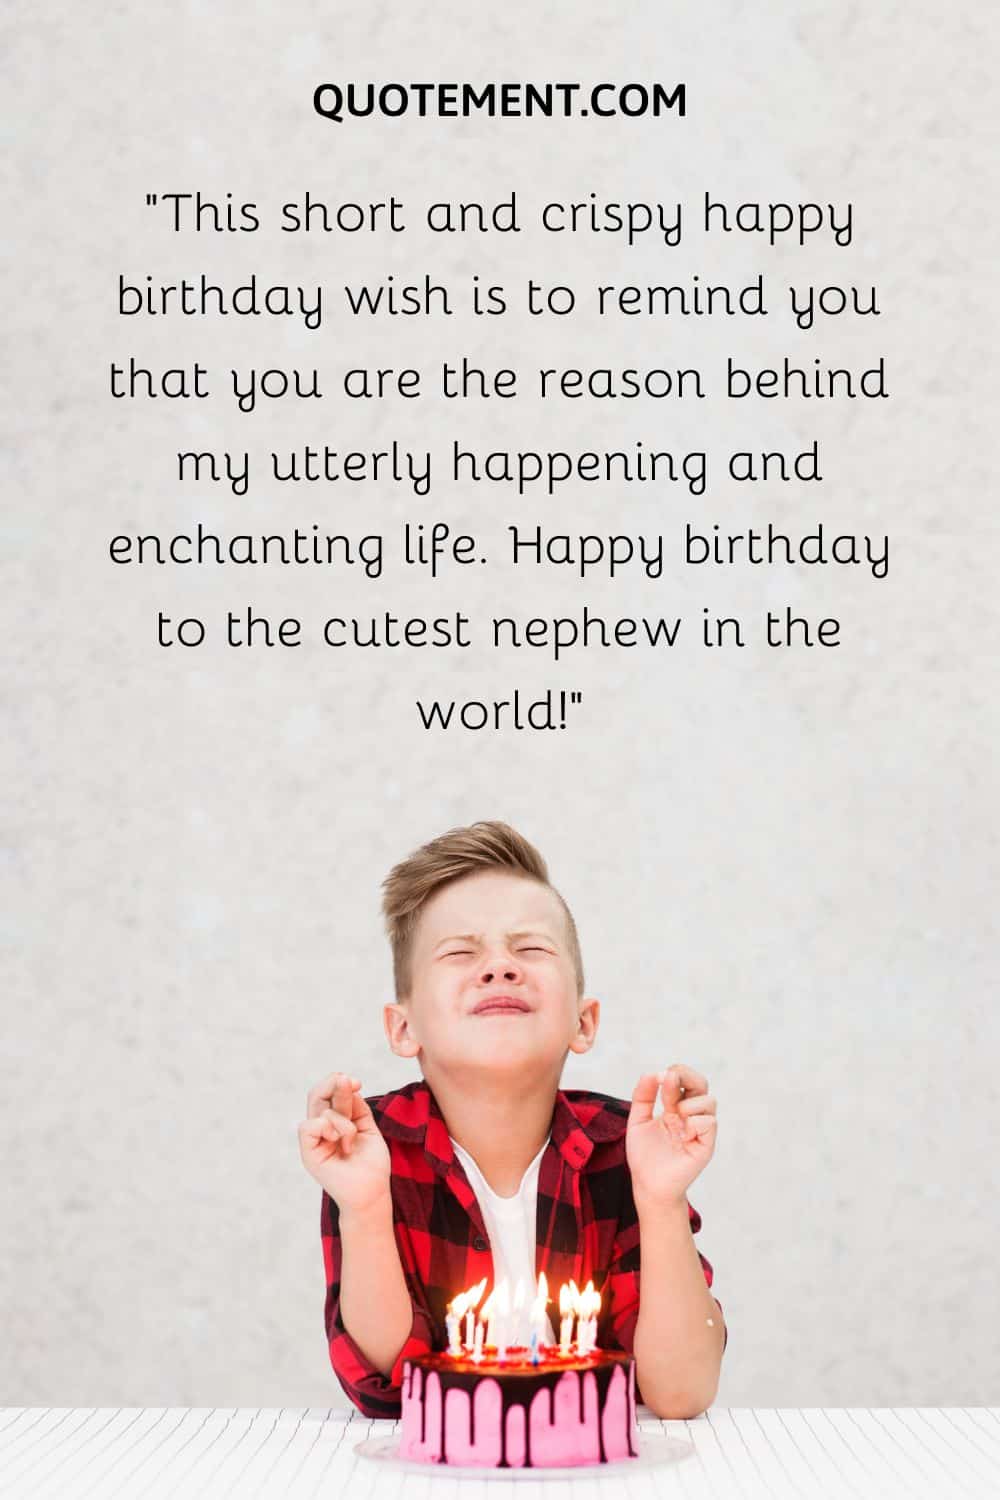 This short and crispy happy birthday wish